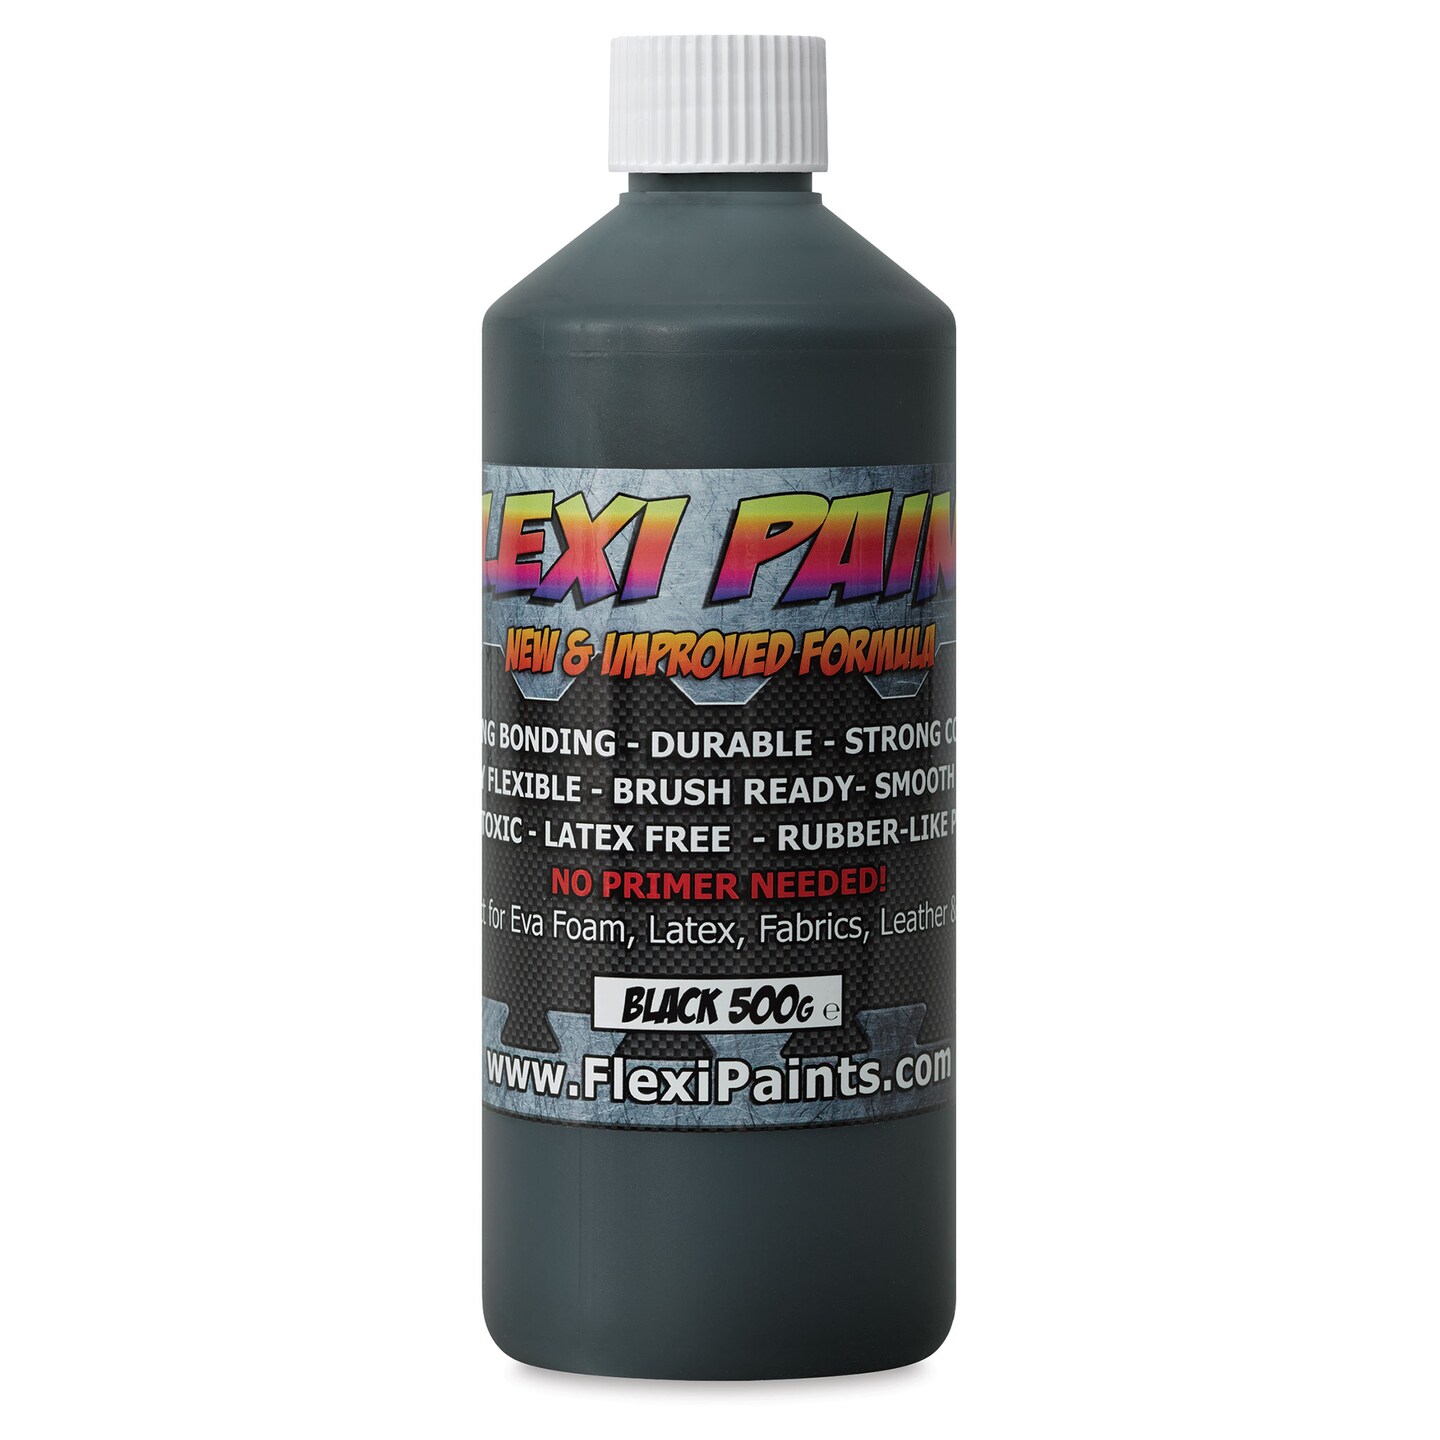 Flexi Paint Waterbased Flexible Cosplay Paint - Black, 500 g (17.6 oz)